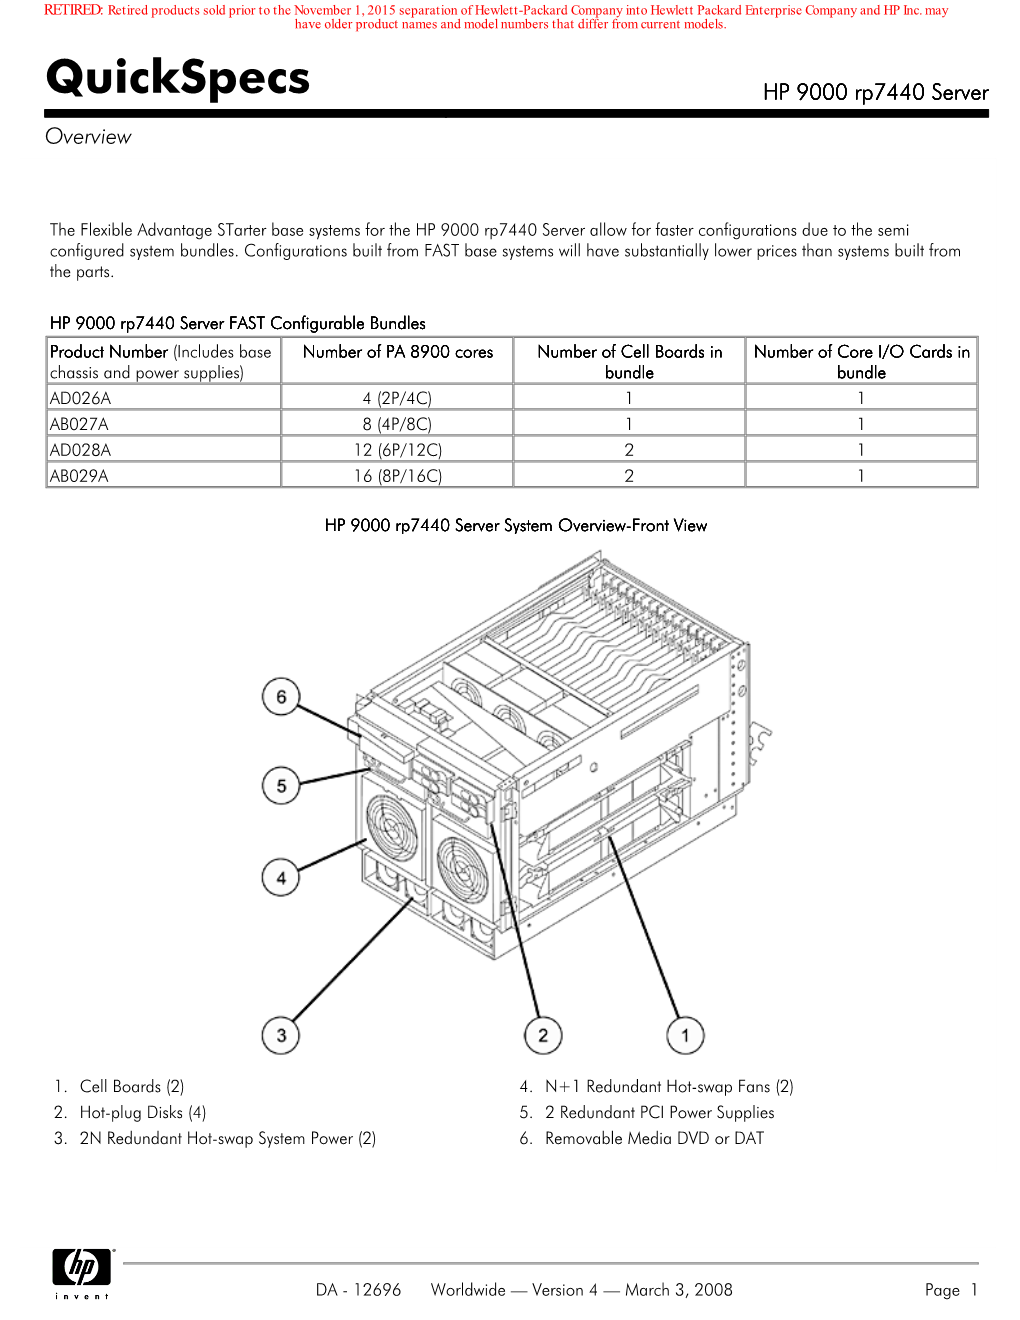 Quickspecs HP 9000 Rp7440 Server Overview